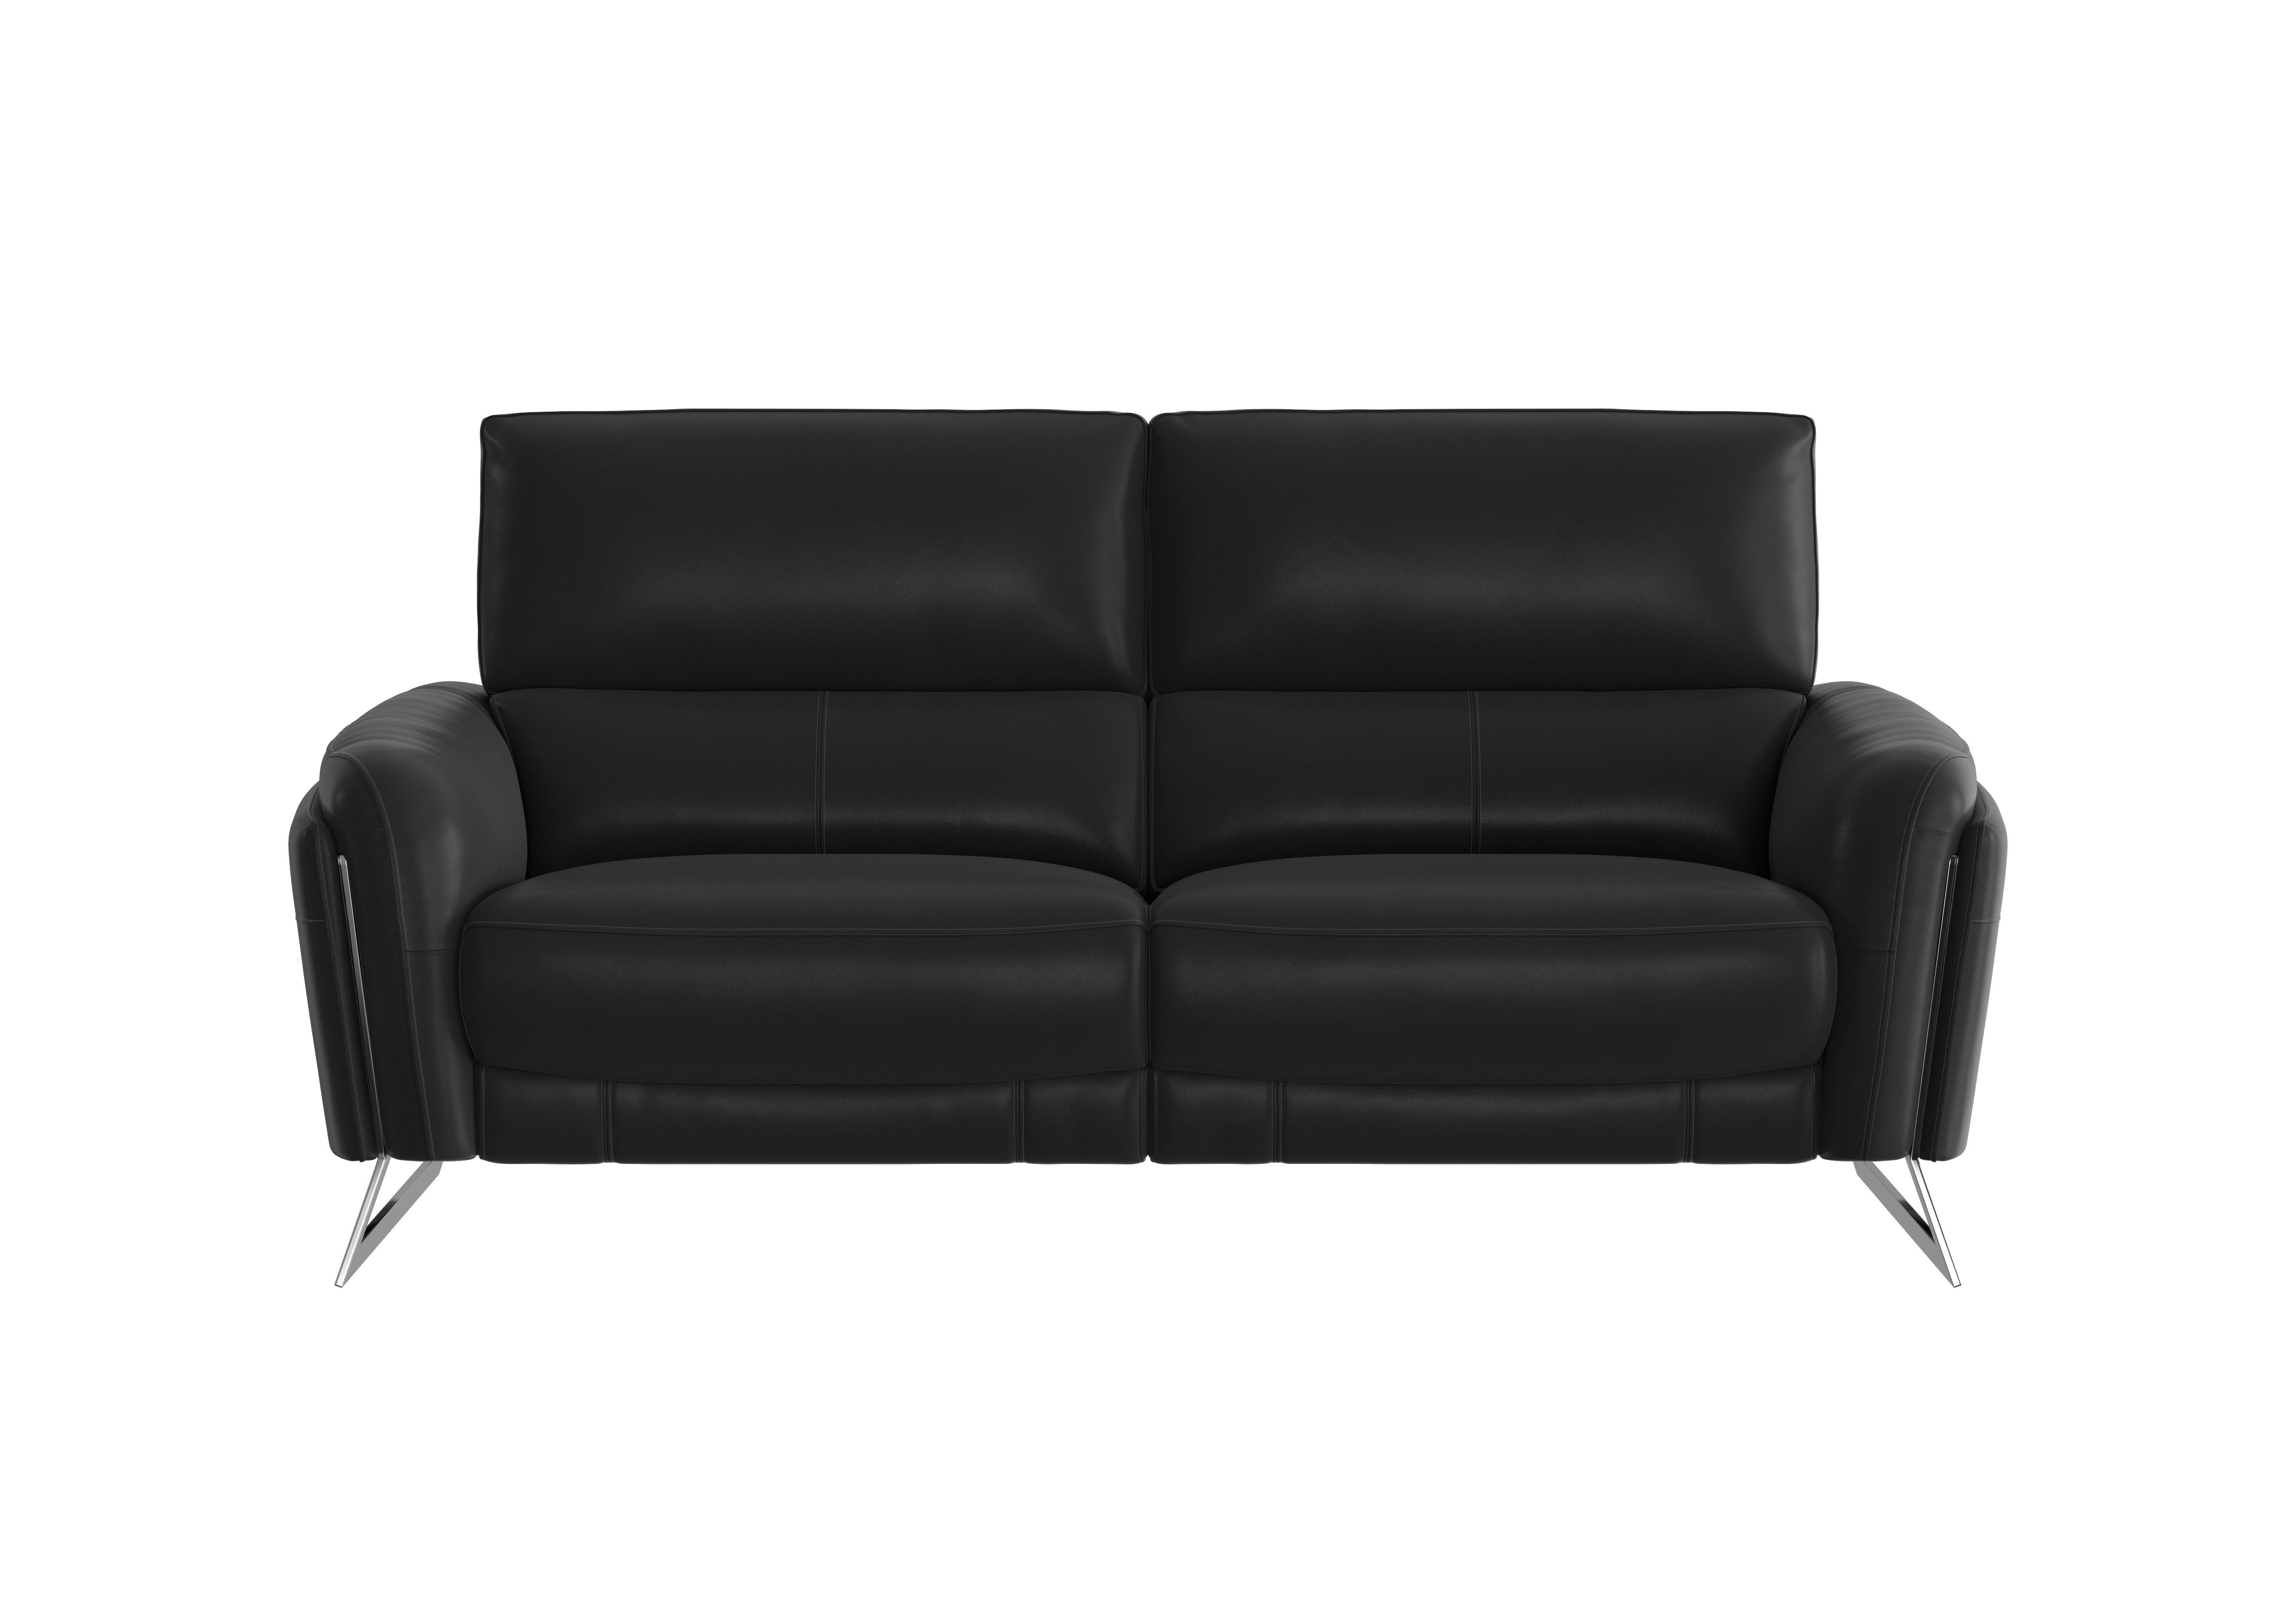 Amarilla 3 Seater Leather Sofa in Bv-3500 Classic Black on Furniture Village